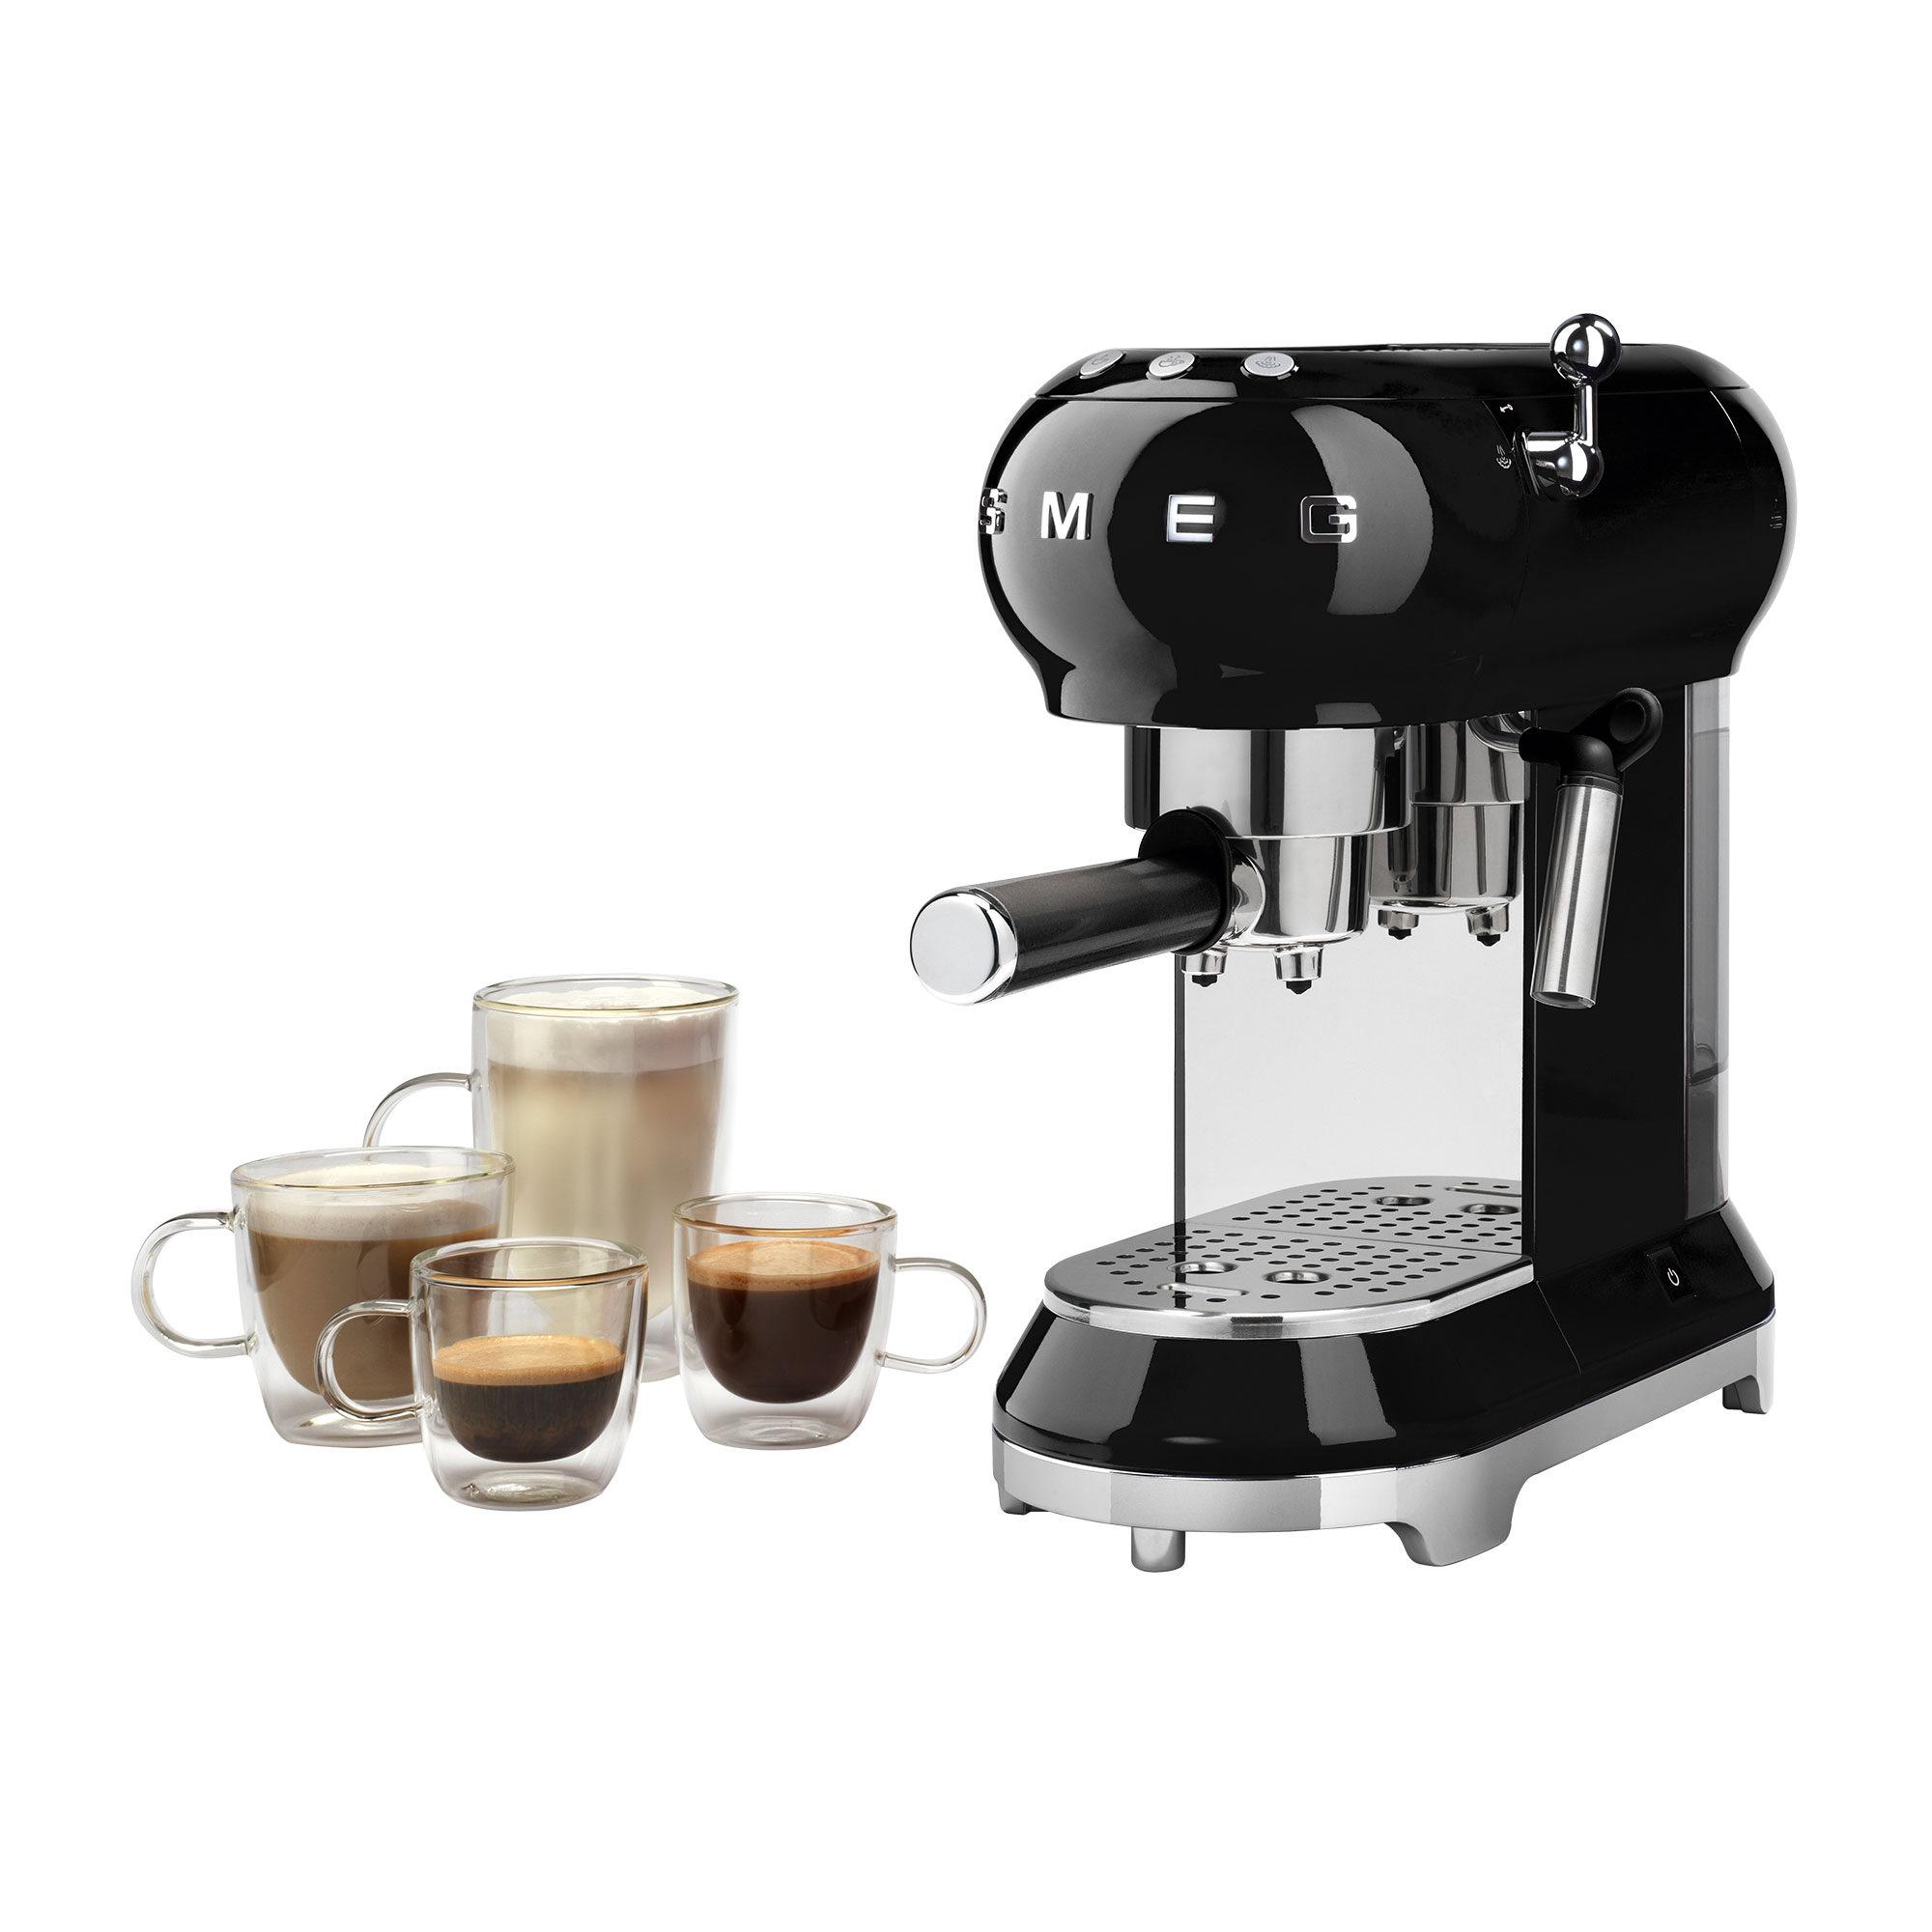 Smeg 50's Retro Style Espresso Coffee Machine Black Image 5